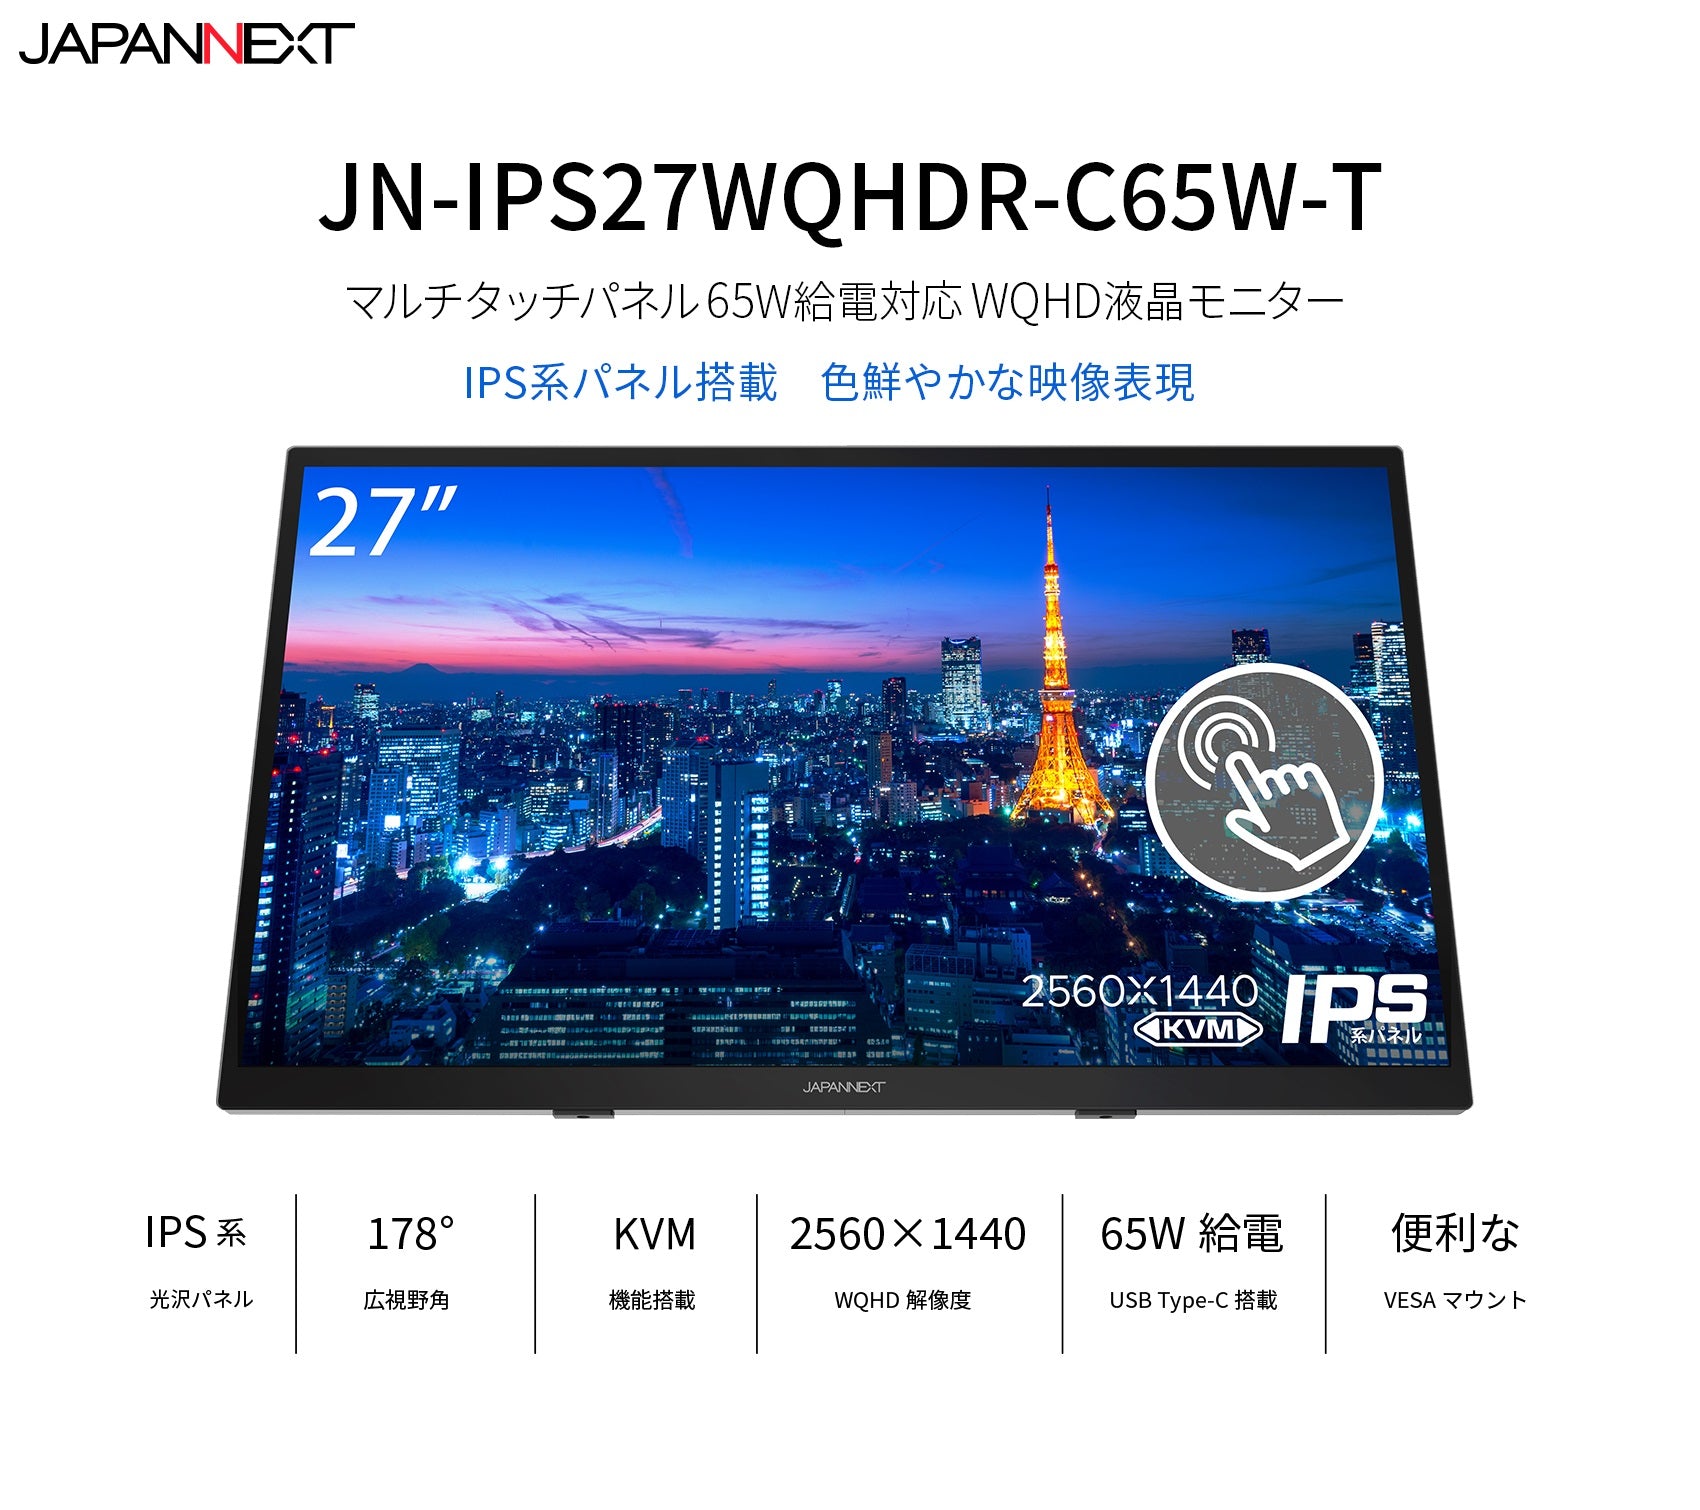 JAPANNEXT 27インチ IPS 10点タッチ対応 WQHD解像度USB-C給電対応 液晶モニターJN-IPS27WQHDR-C65W-T  HDMI DP USB-C(65W給電) KVM機能 10点マルチタッチ対応